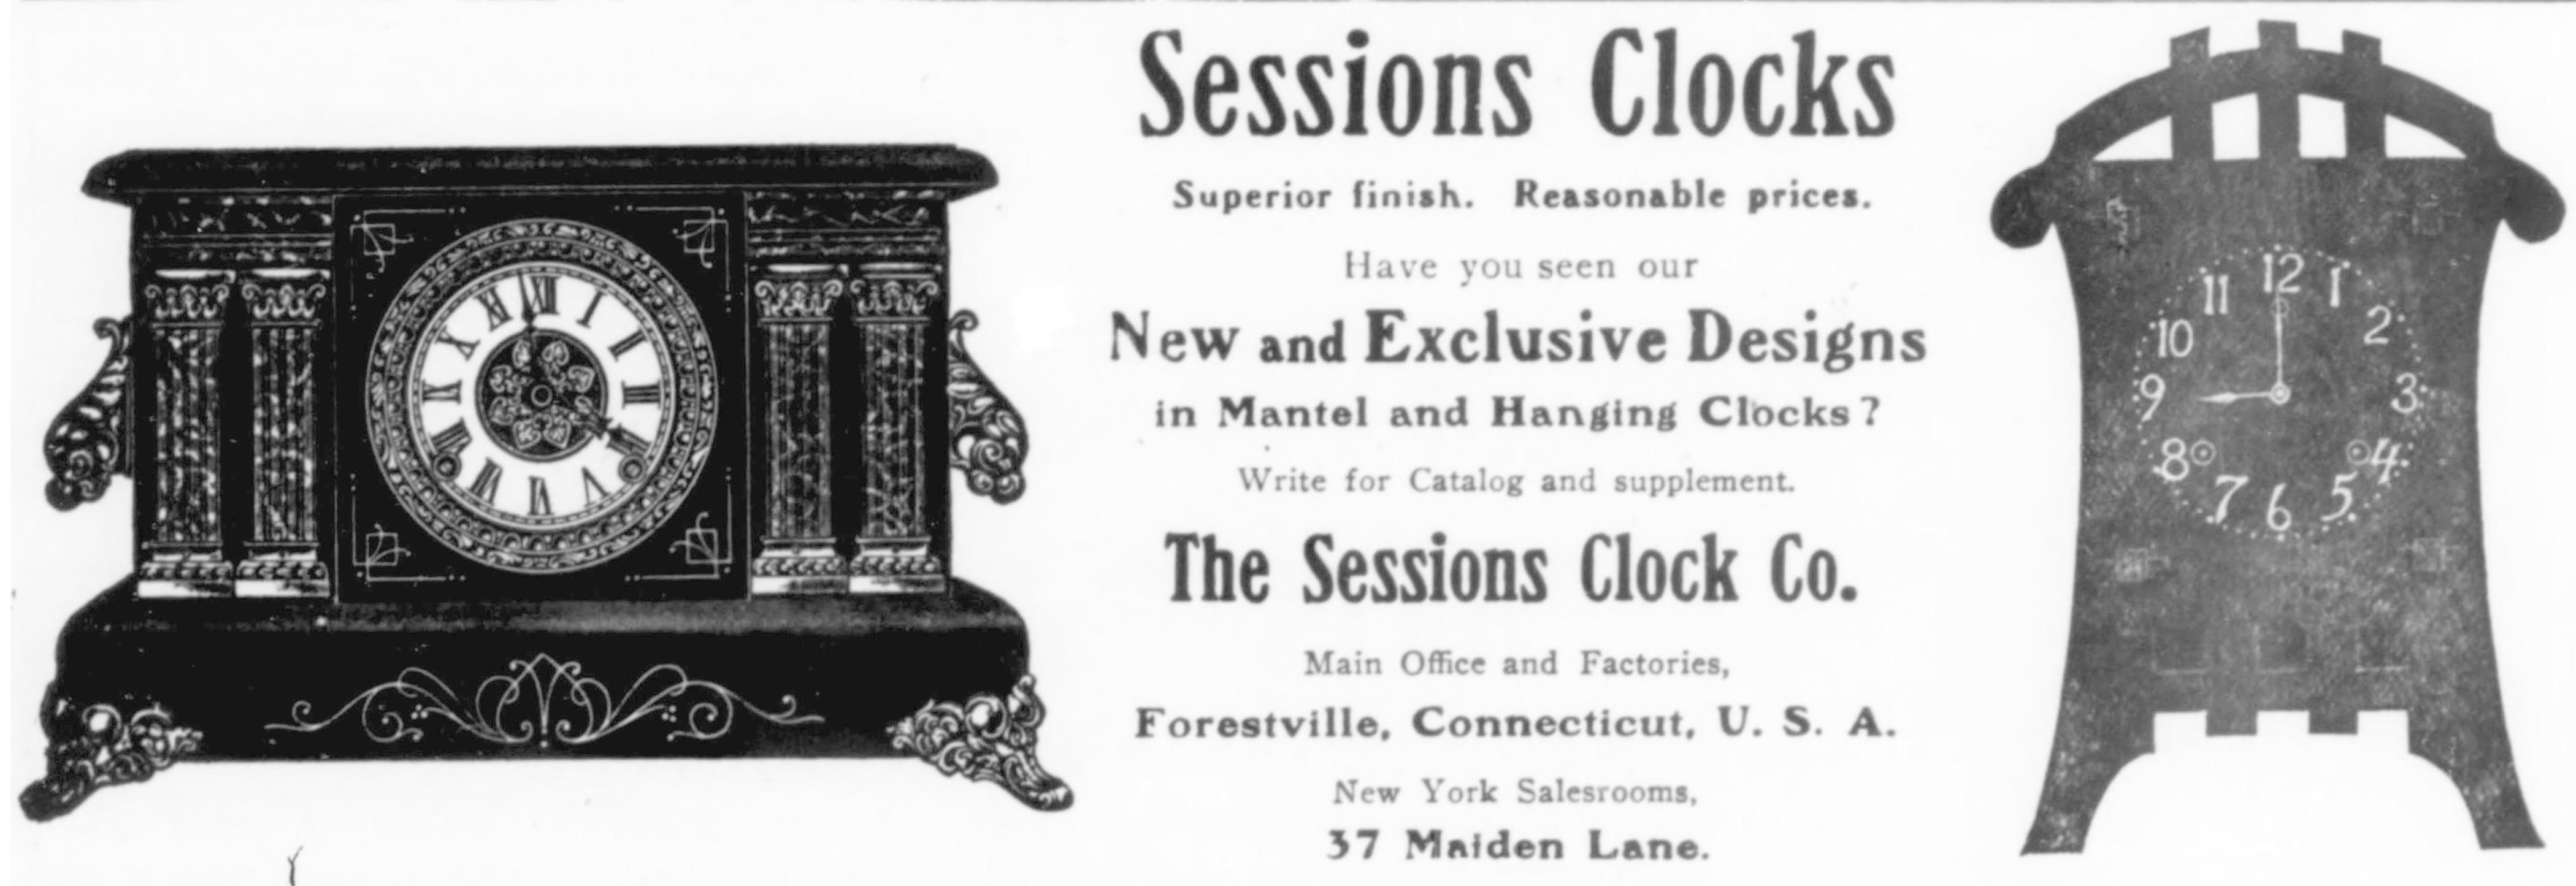 Sessions Clocks 1906 0.jpg